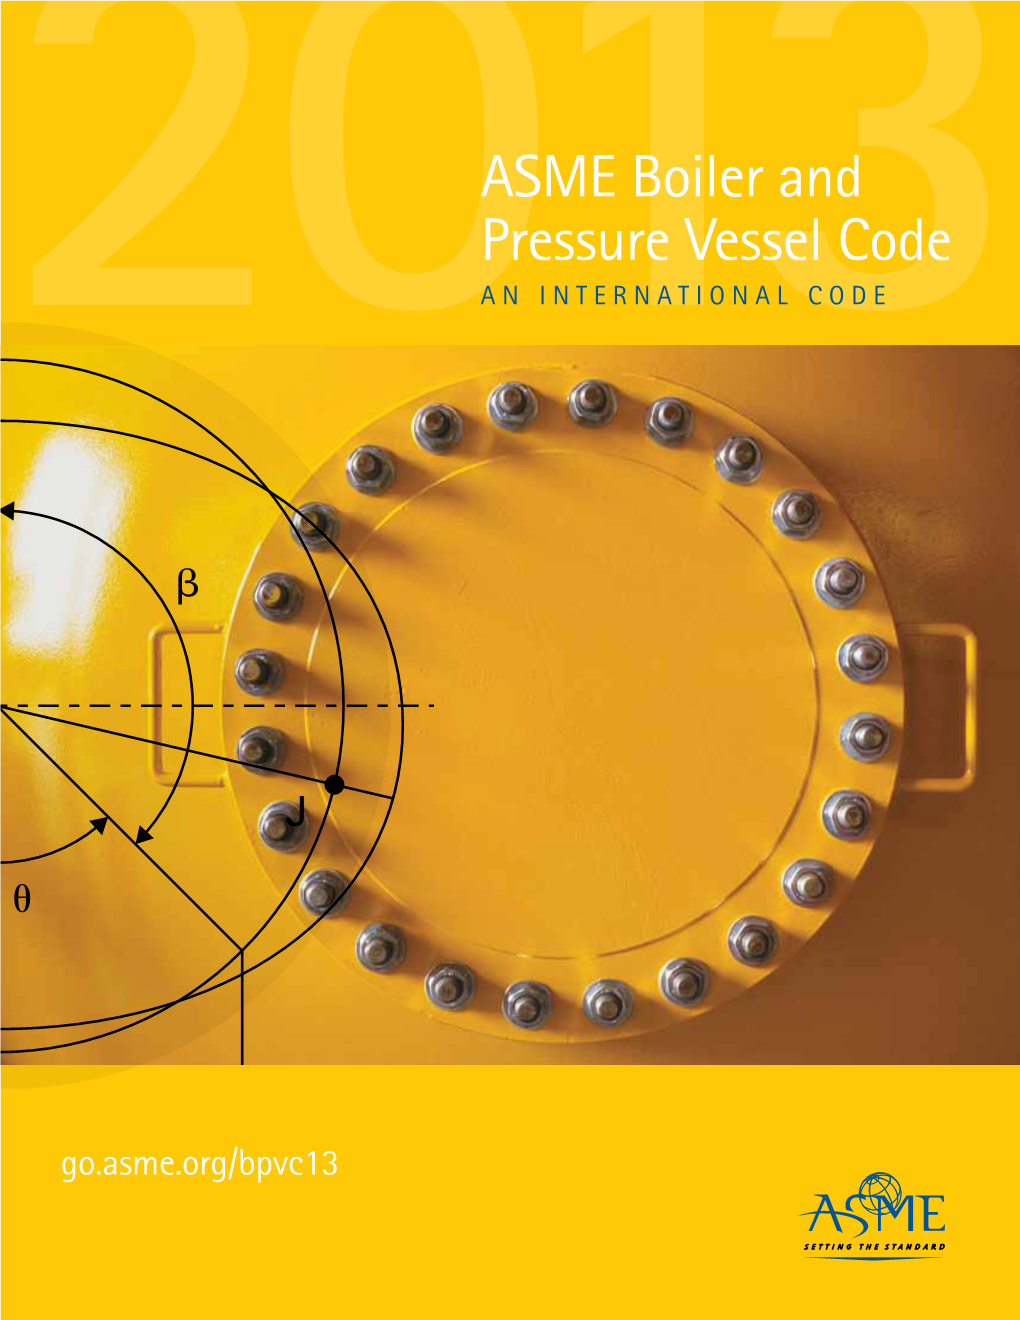 ASME Boiler and Pressure Vessel Code an INTERNATIONAL CODE